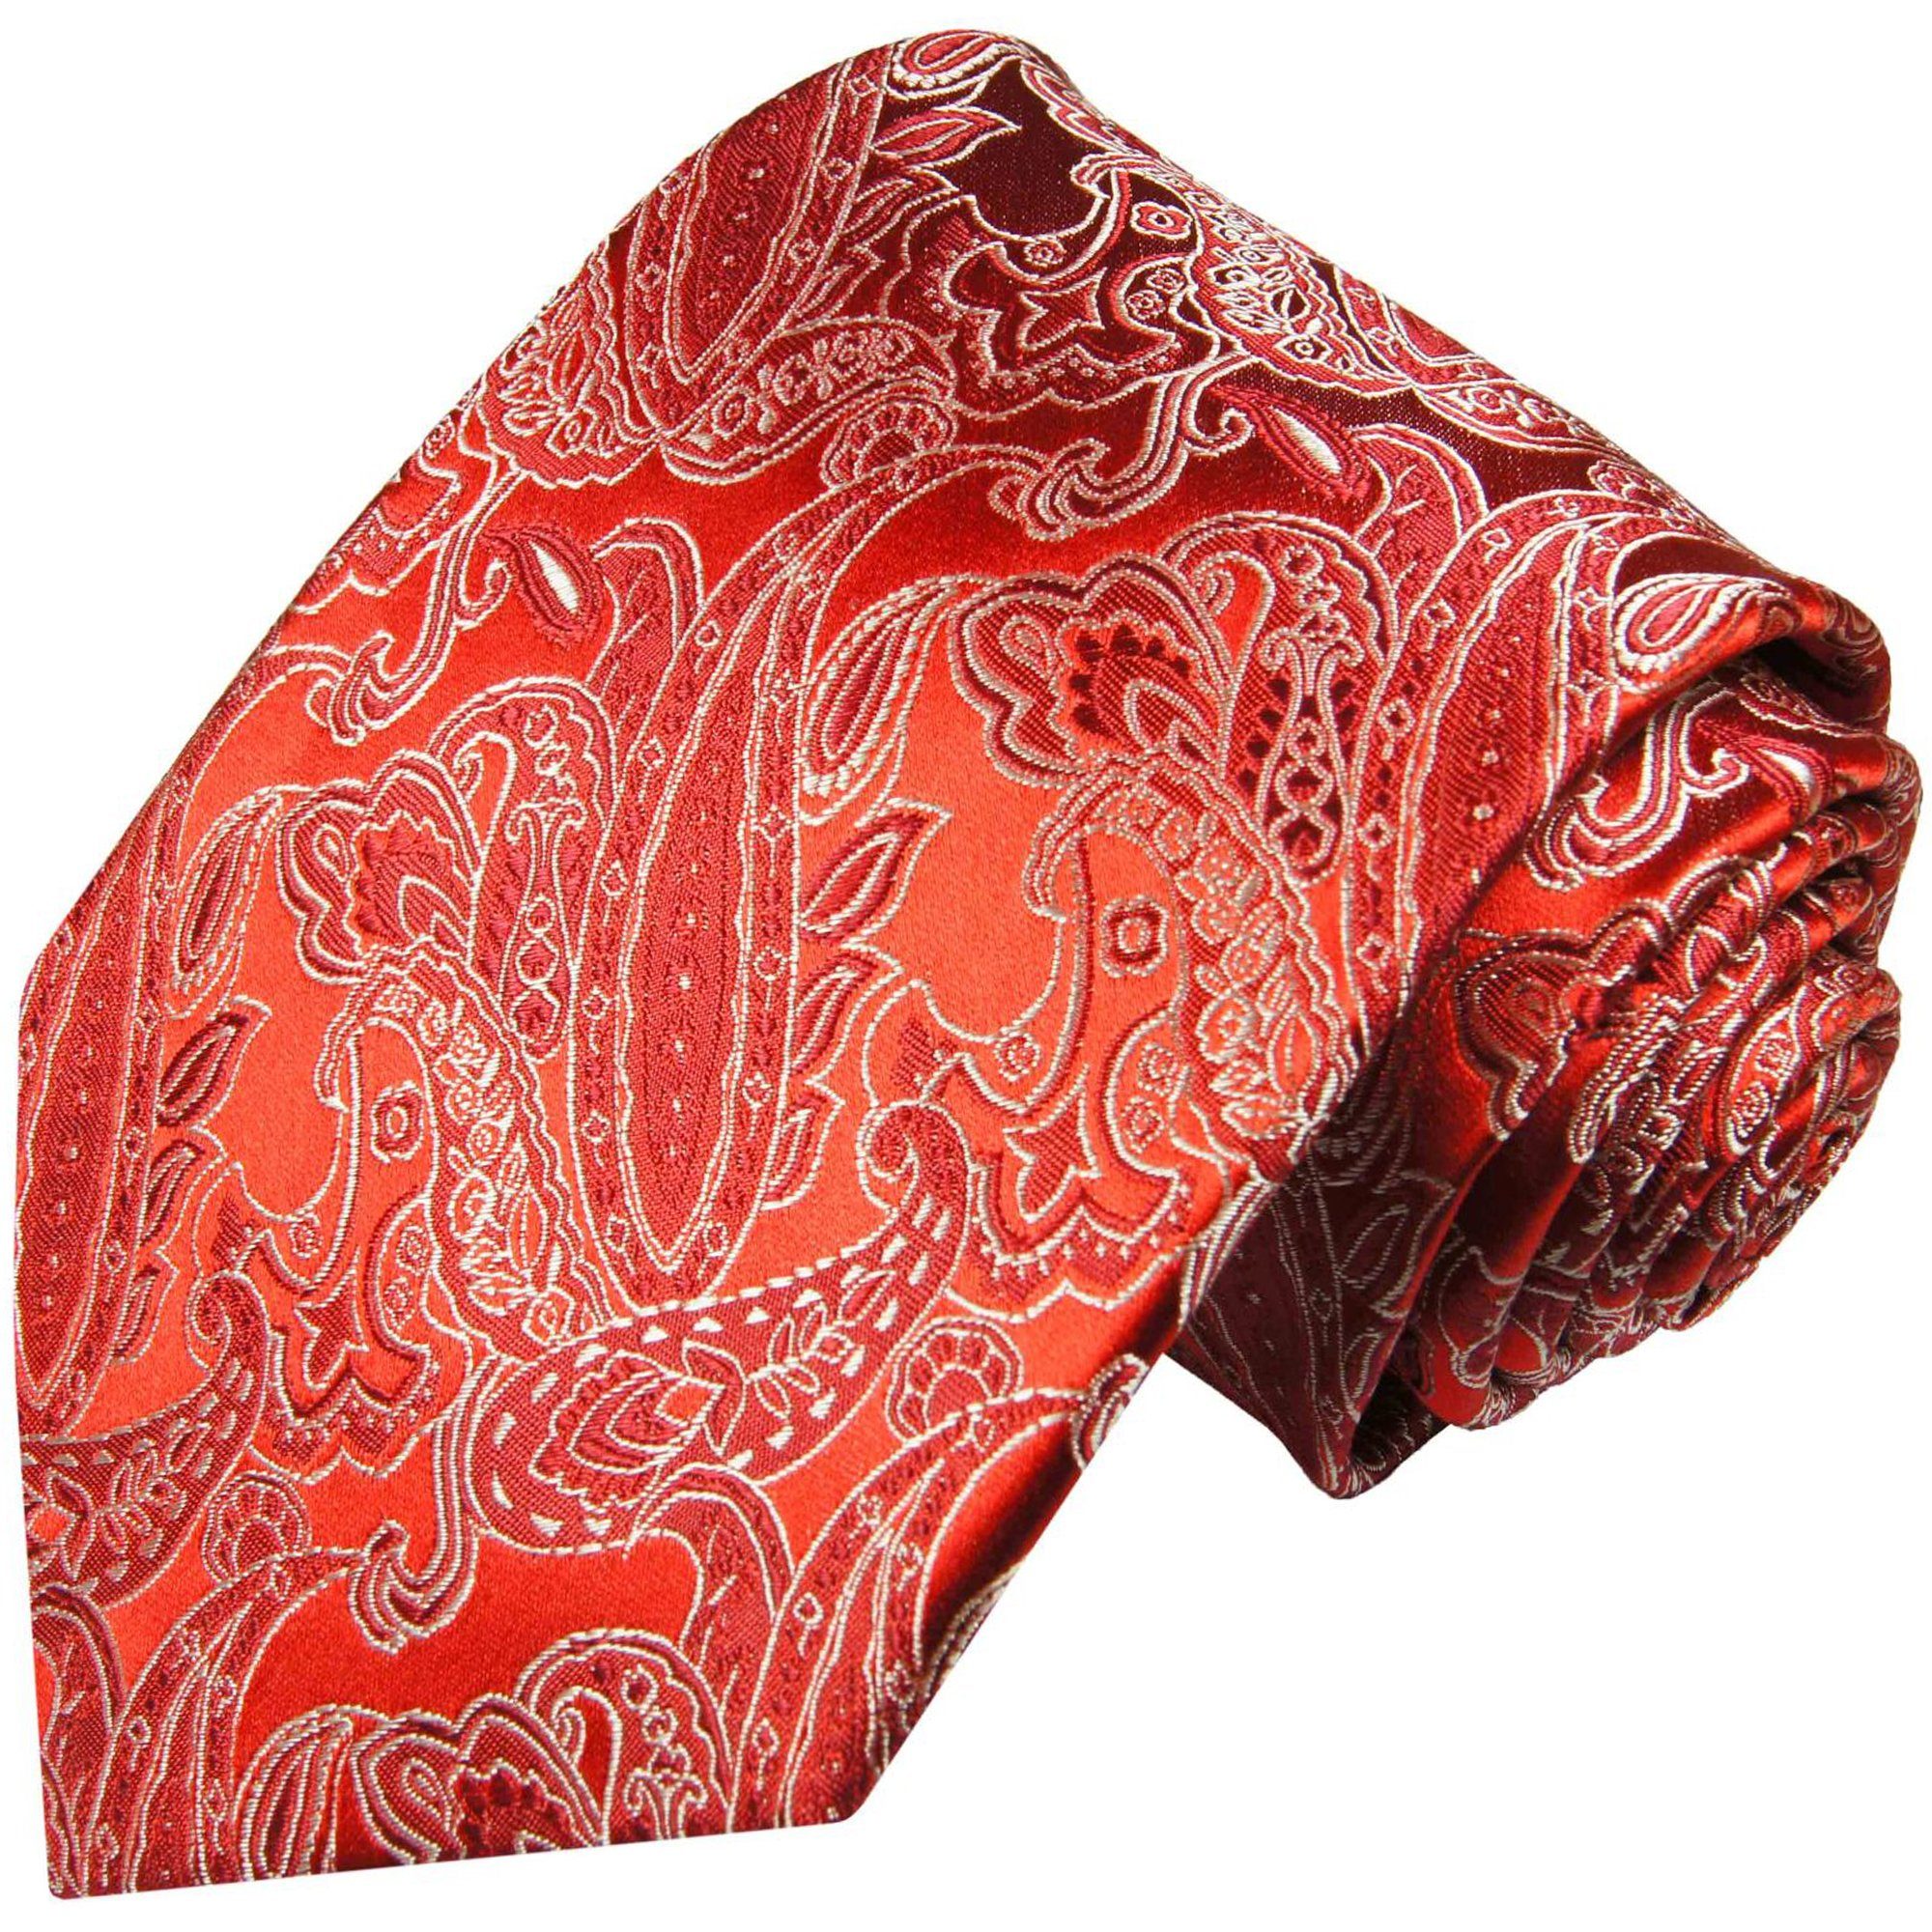 Schlips Seidenkrawatte brokat Herren paisley Seide 100% Elegante Krawatte Paul Breit 926 (8cm), Malone rot